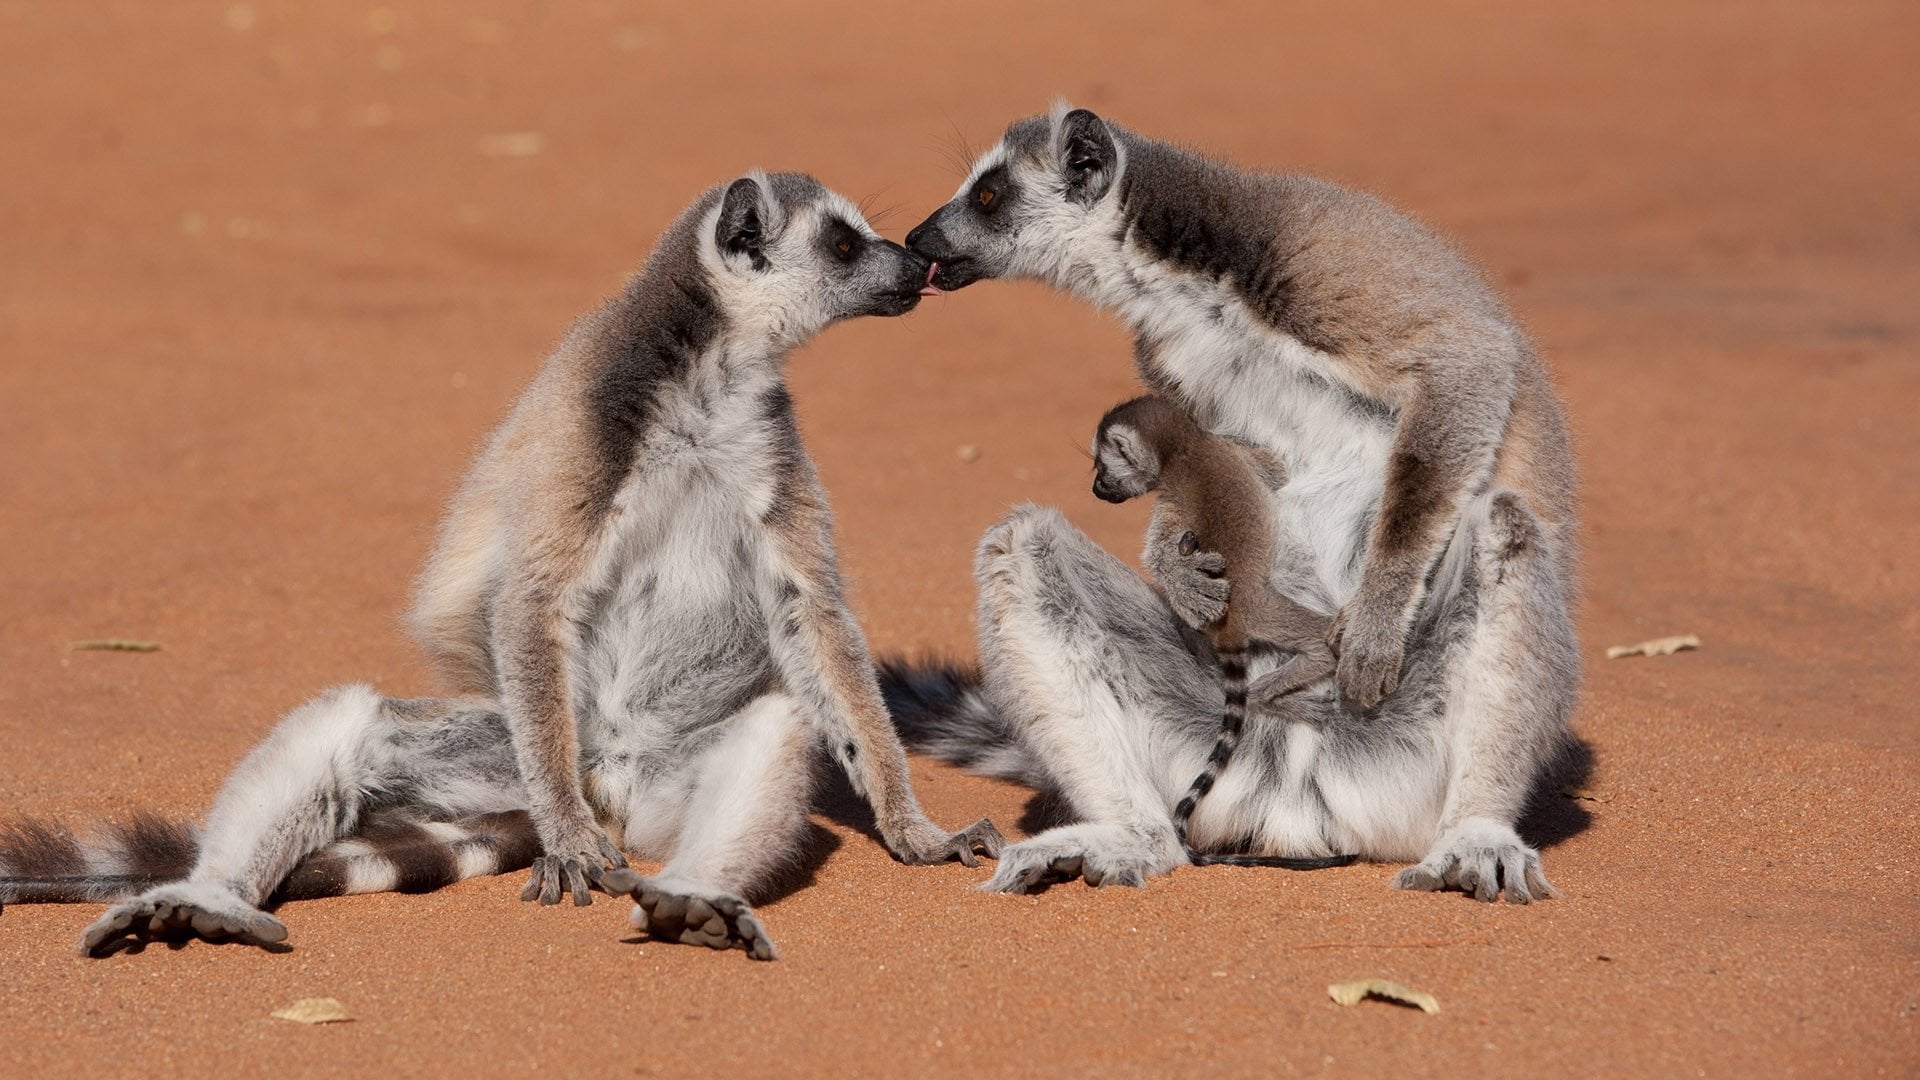 Island of Lemurs: Madagascar (2014)